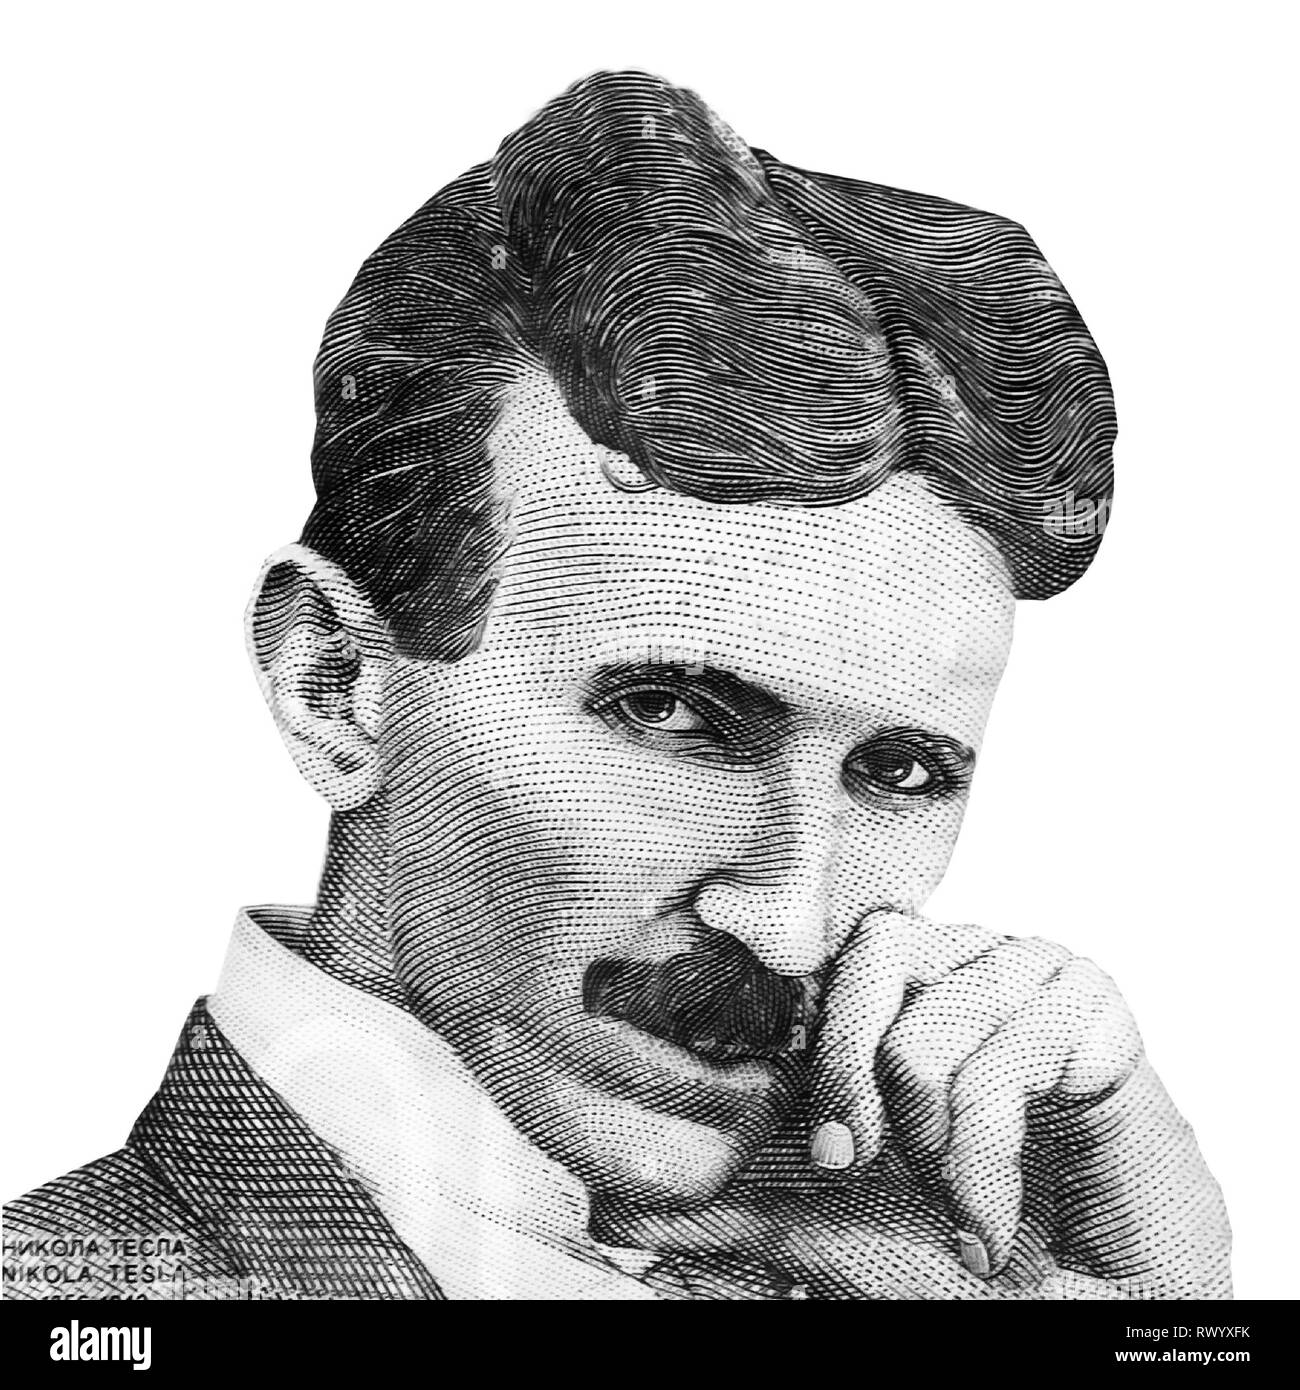 Nikola Tesla portrait on Serbia 100 dinars banknote close-up. Black and white isolated image on white background Stock Photo